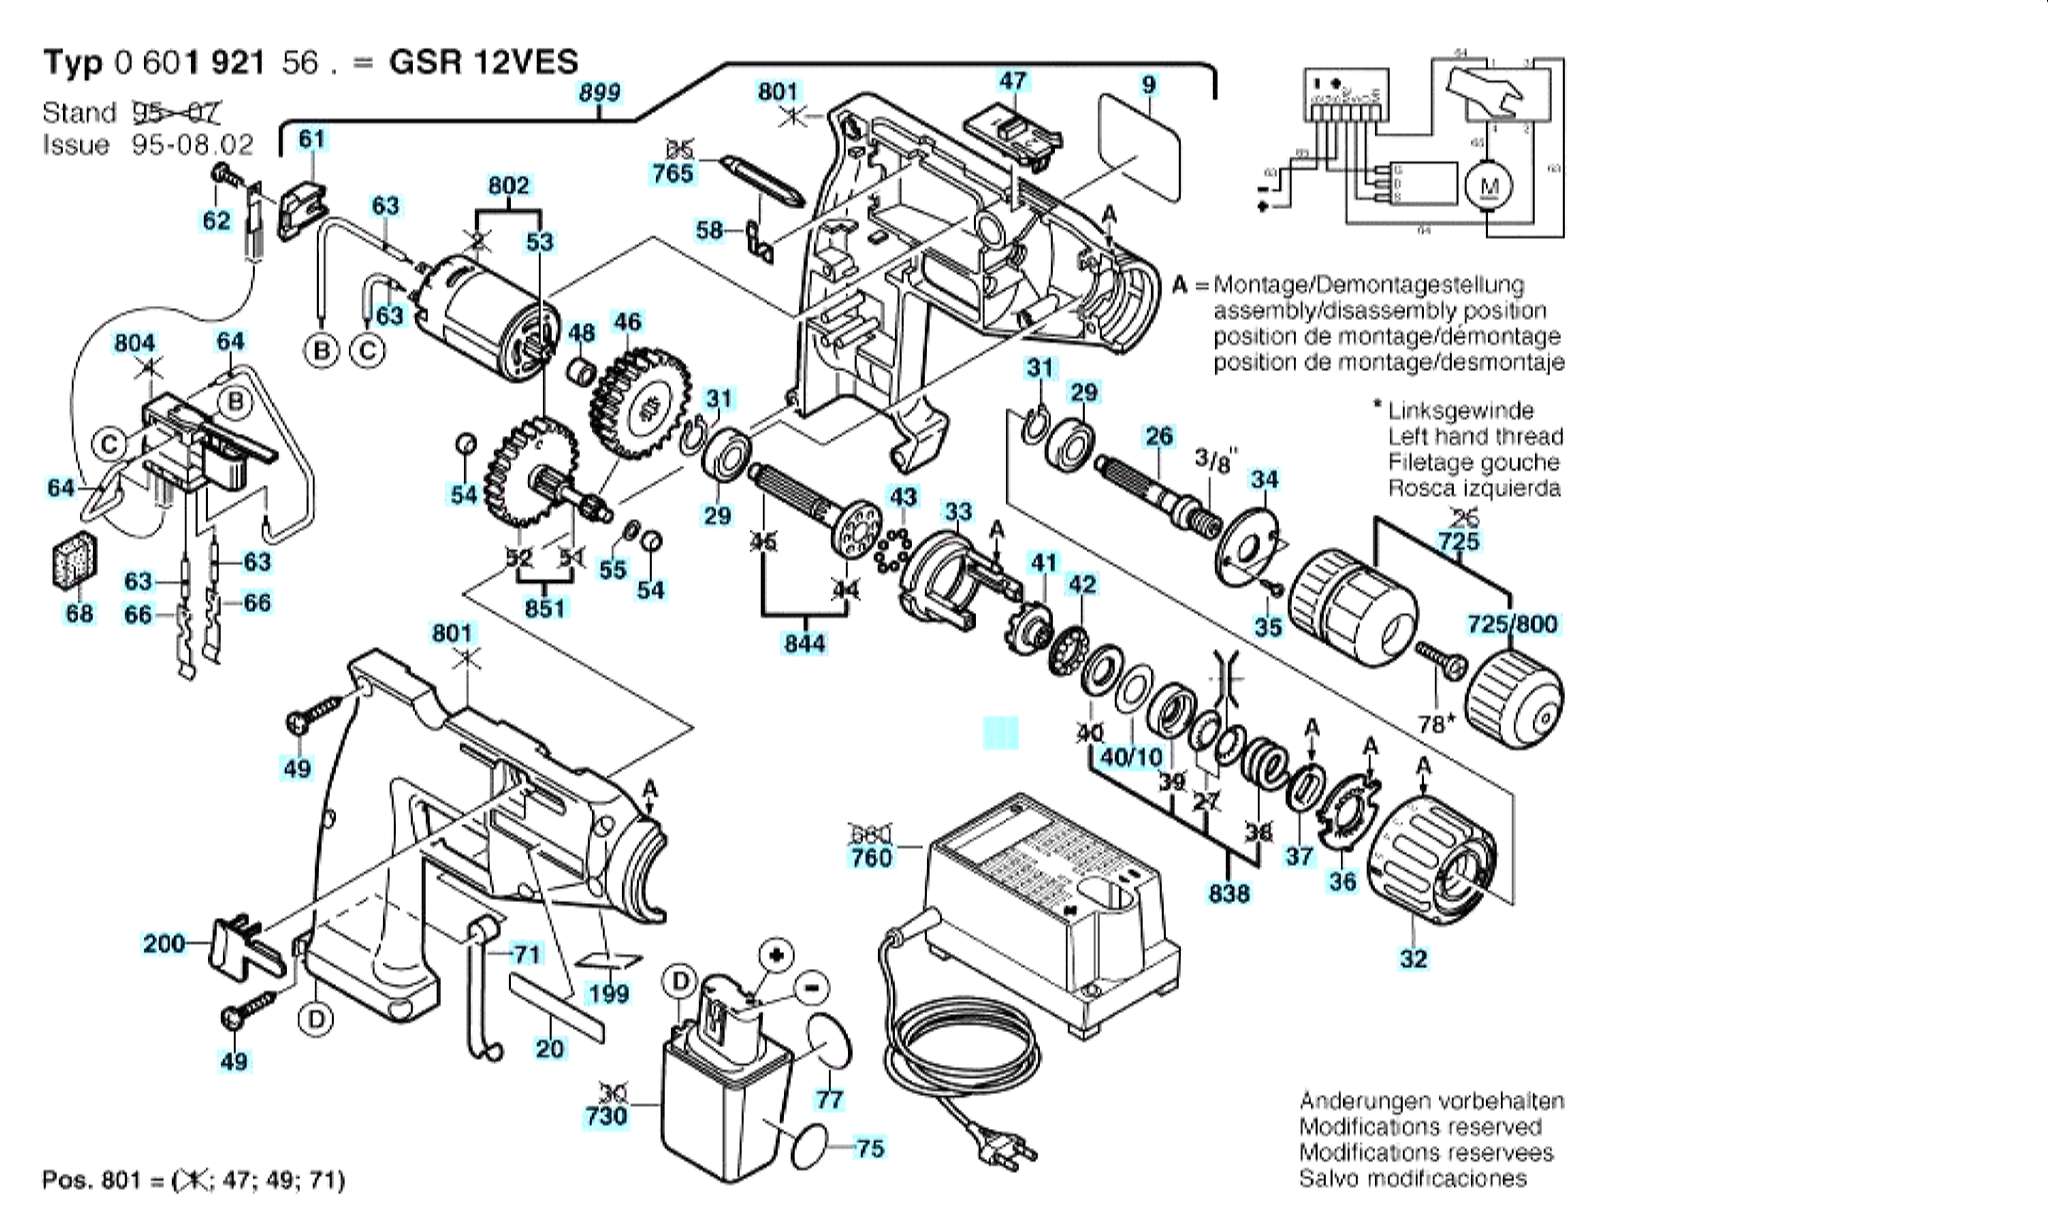 Запчасти, схема и деталировка Bosch GSR 12 VES (ТИП 0601921568)